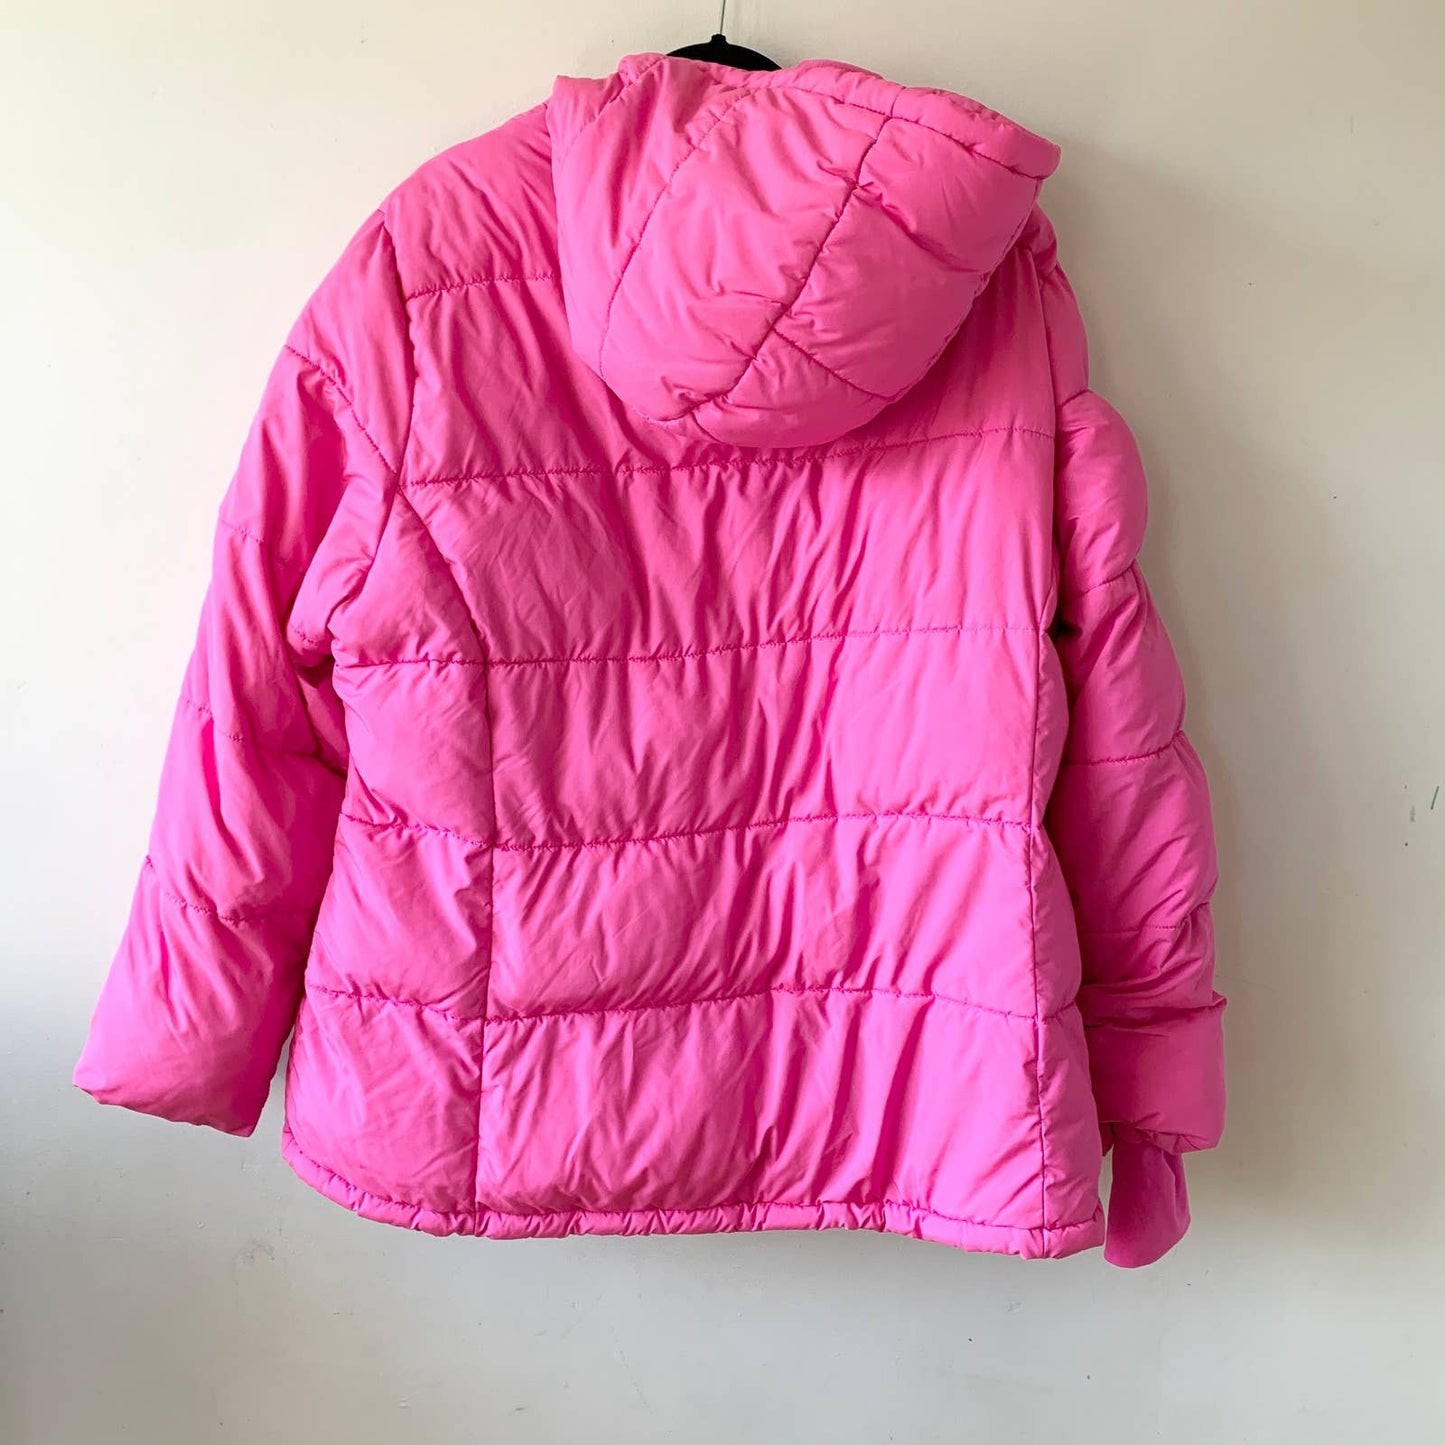 Amazon Essentials Heavyweight Long Sleeve Hooded Neon Pink Puffer Coat XXL